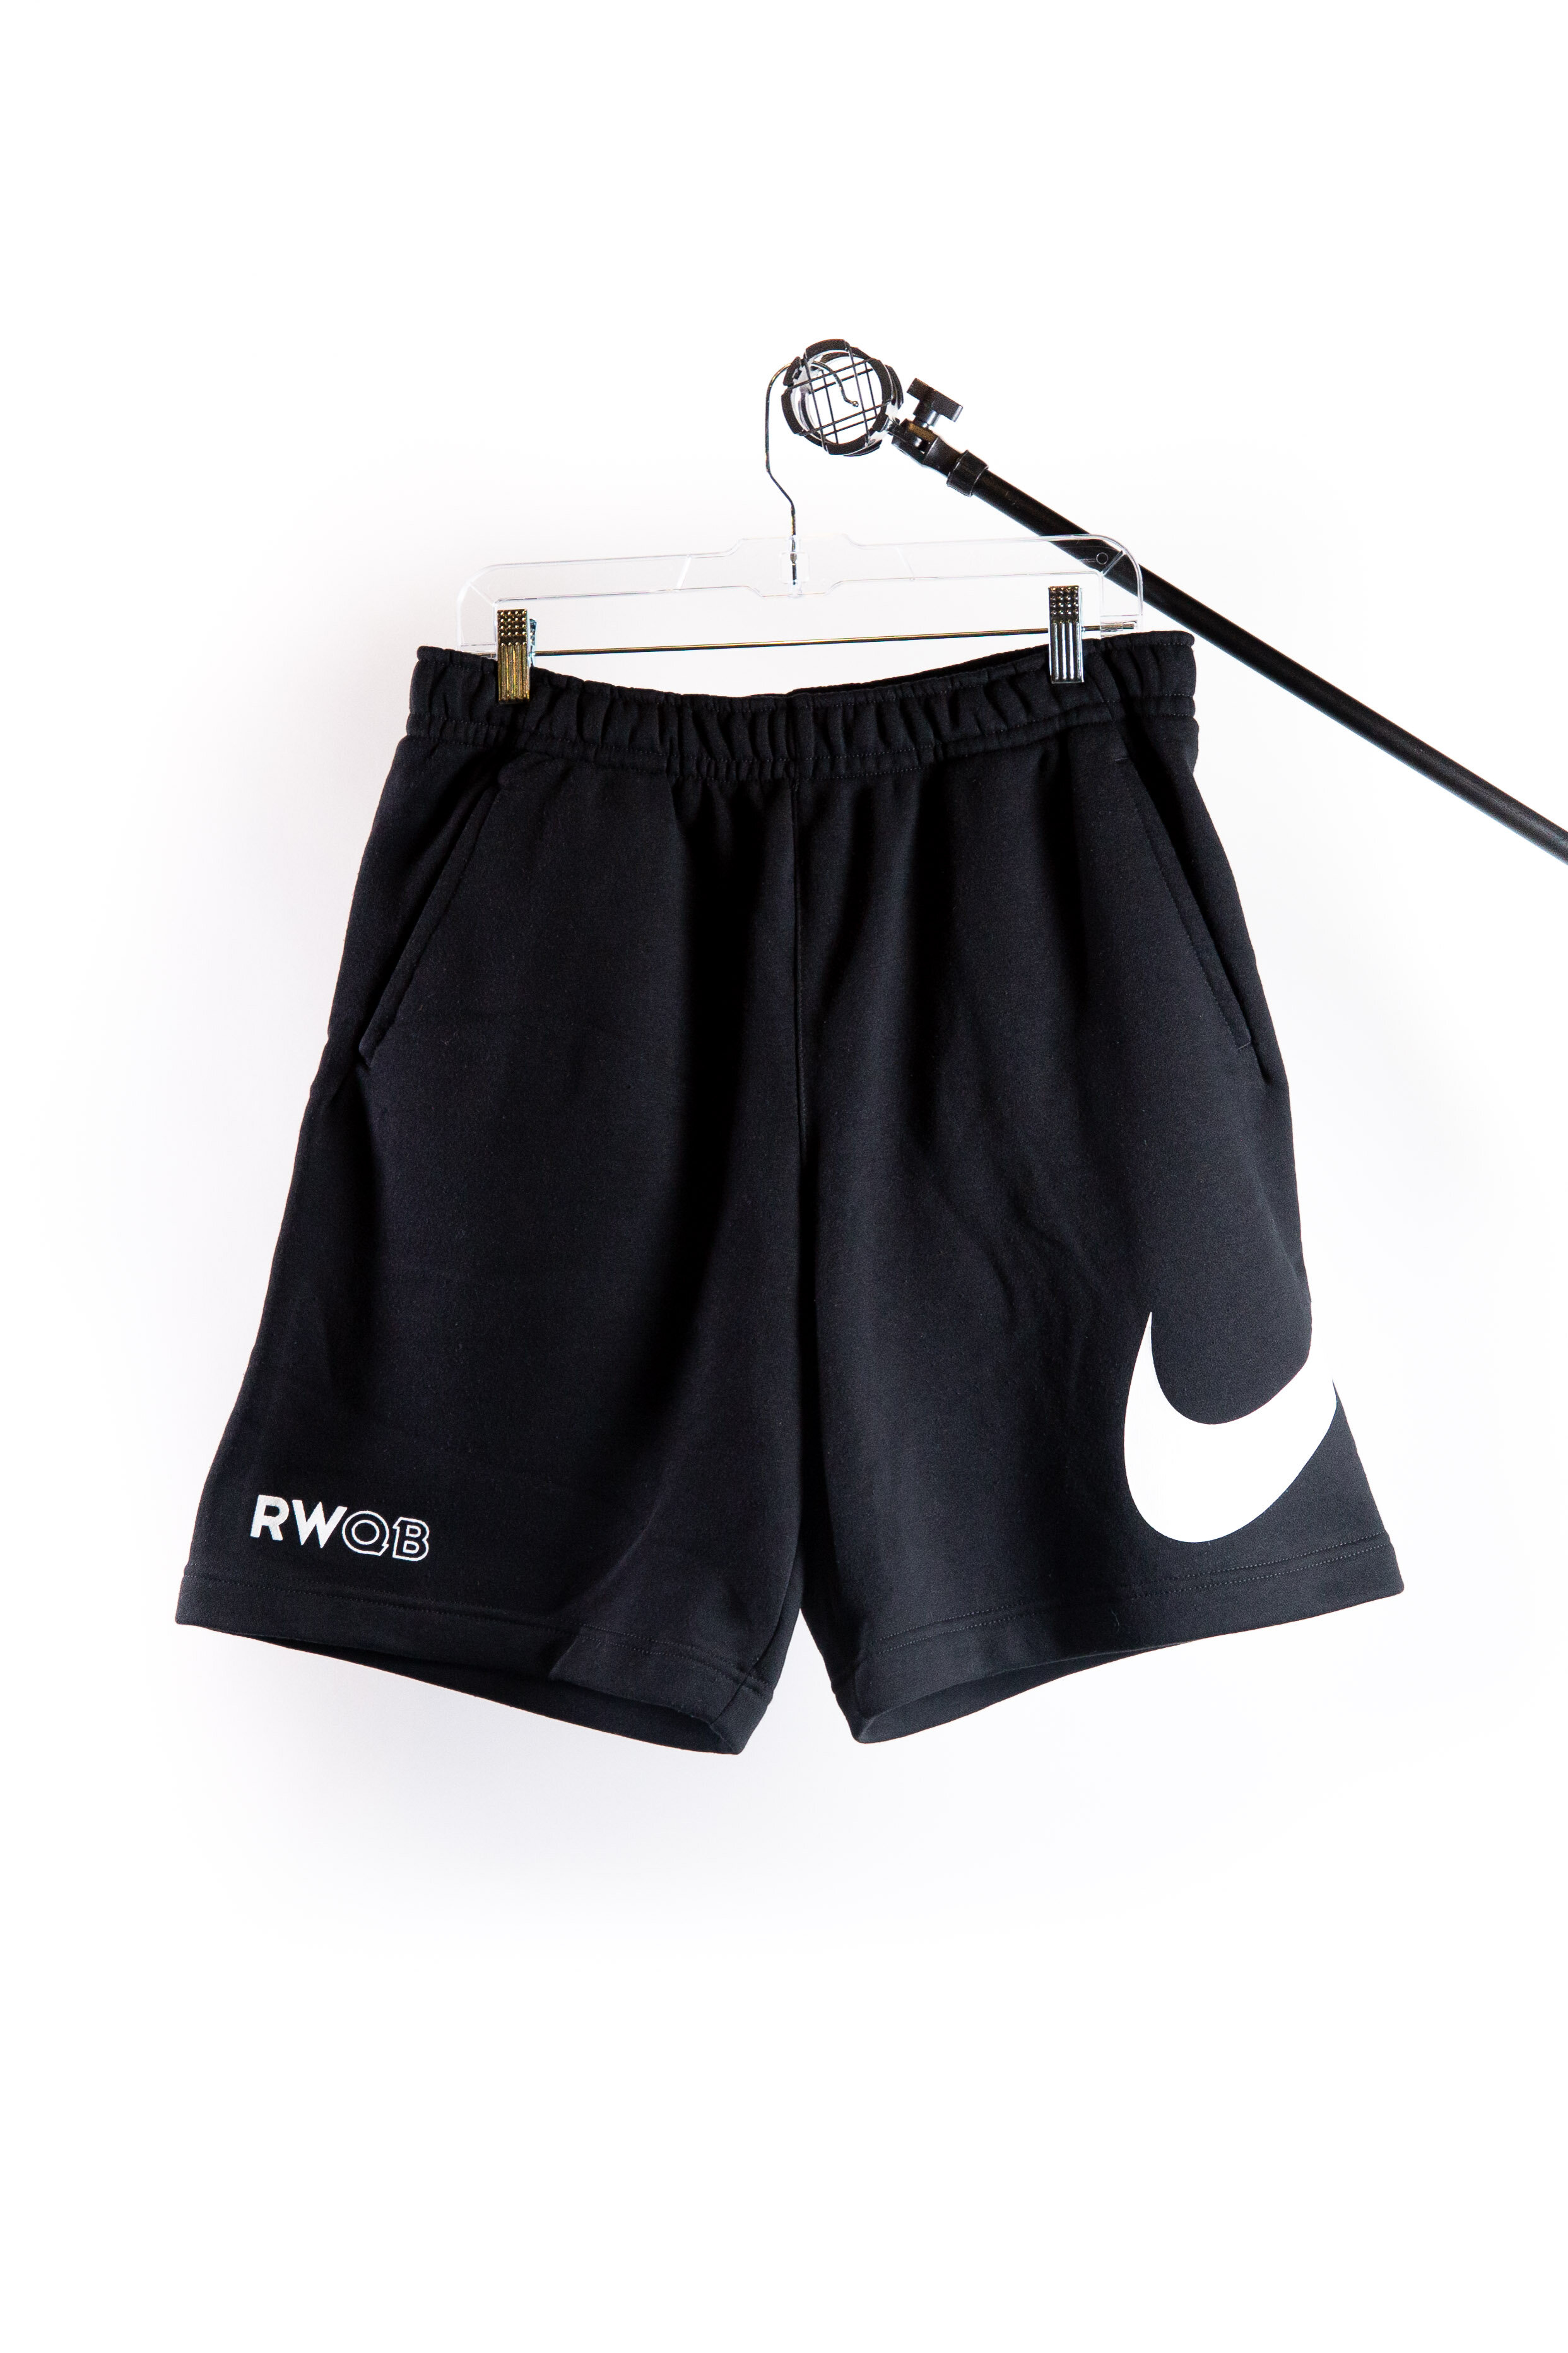 black nike sweat shorts